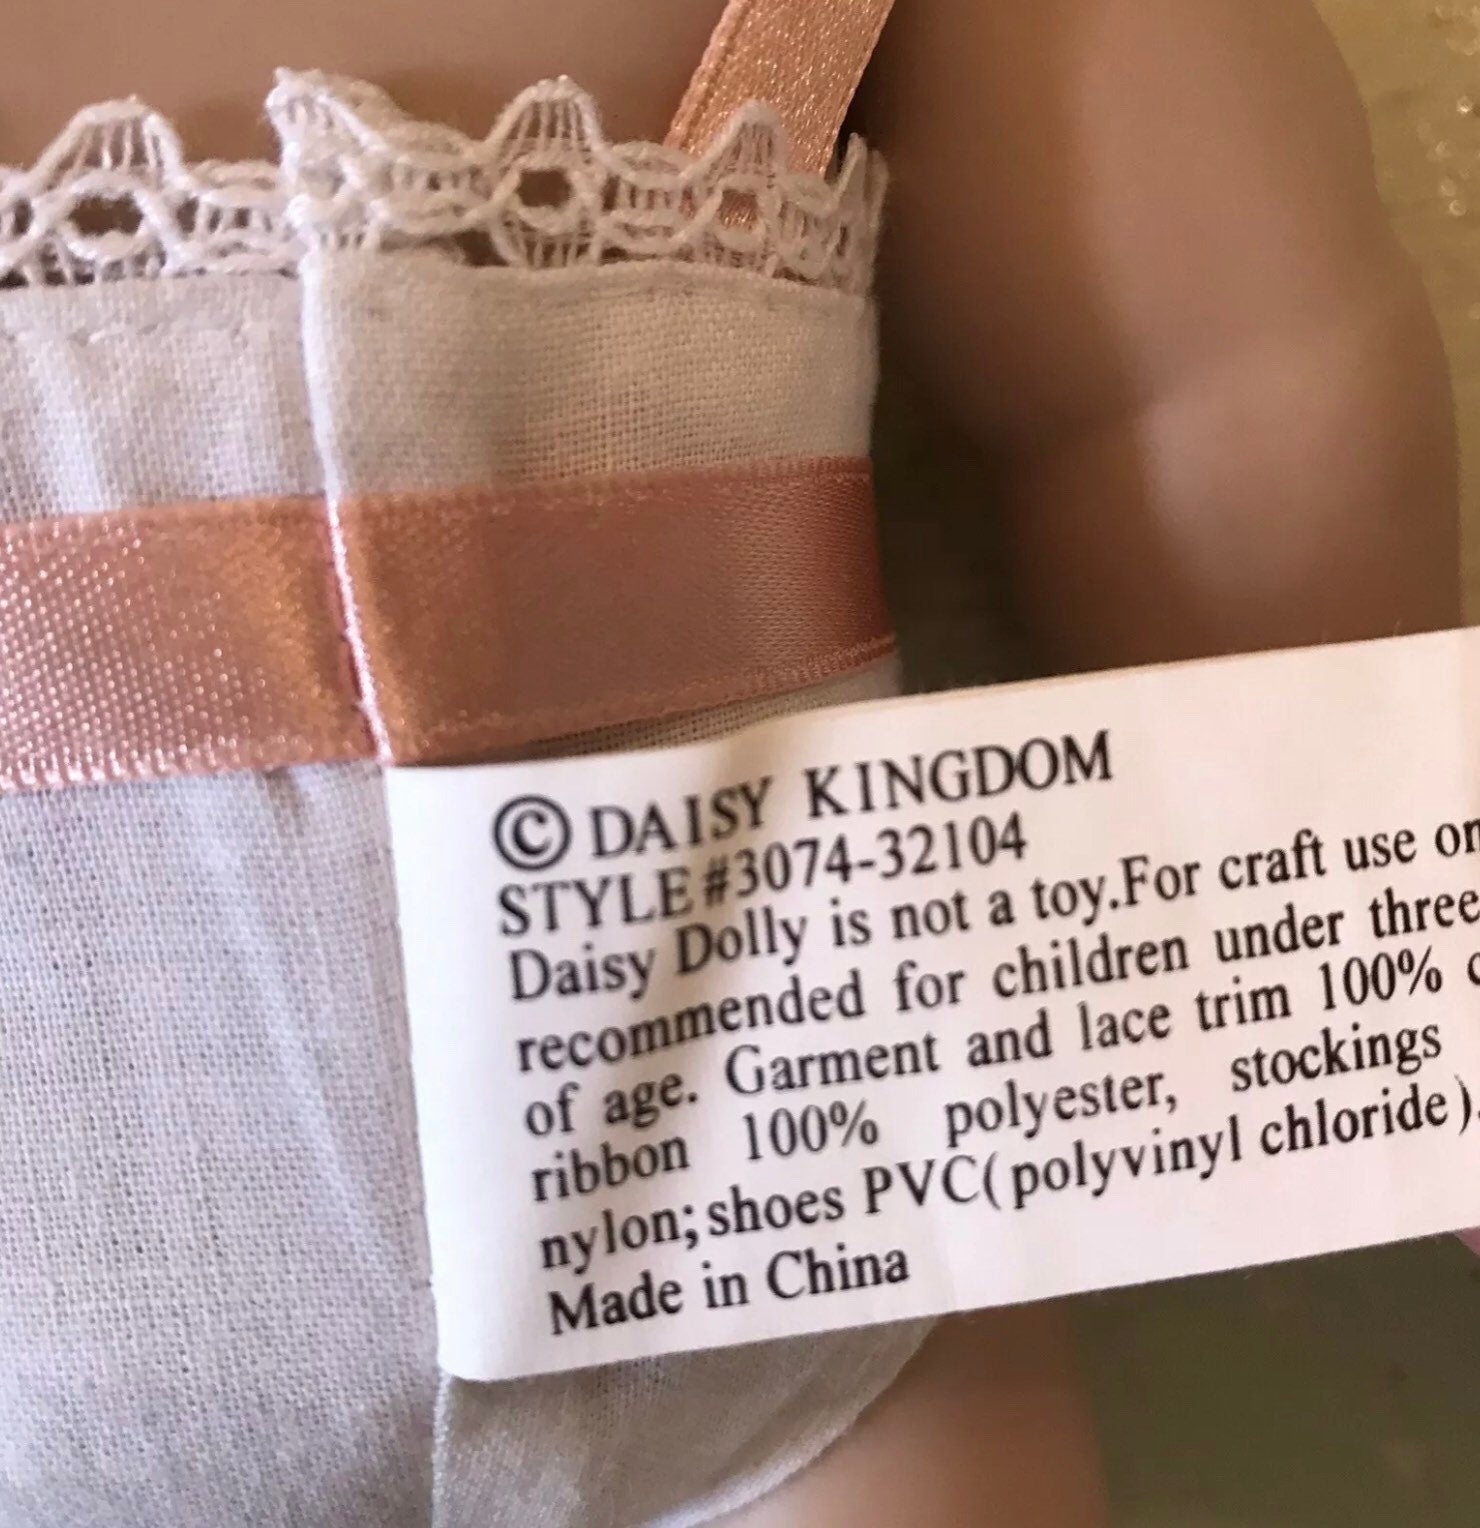 Vintage Daisy Kingdom Doll, Daisy Dolly, Scootles Doll, Kewpie Doll, Dress Me Doll, Original Outfit, 1991, Rare, 11 Inch - A. Mandaline Art